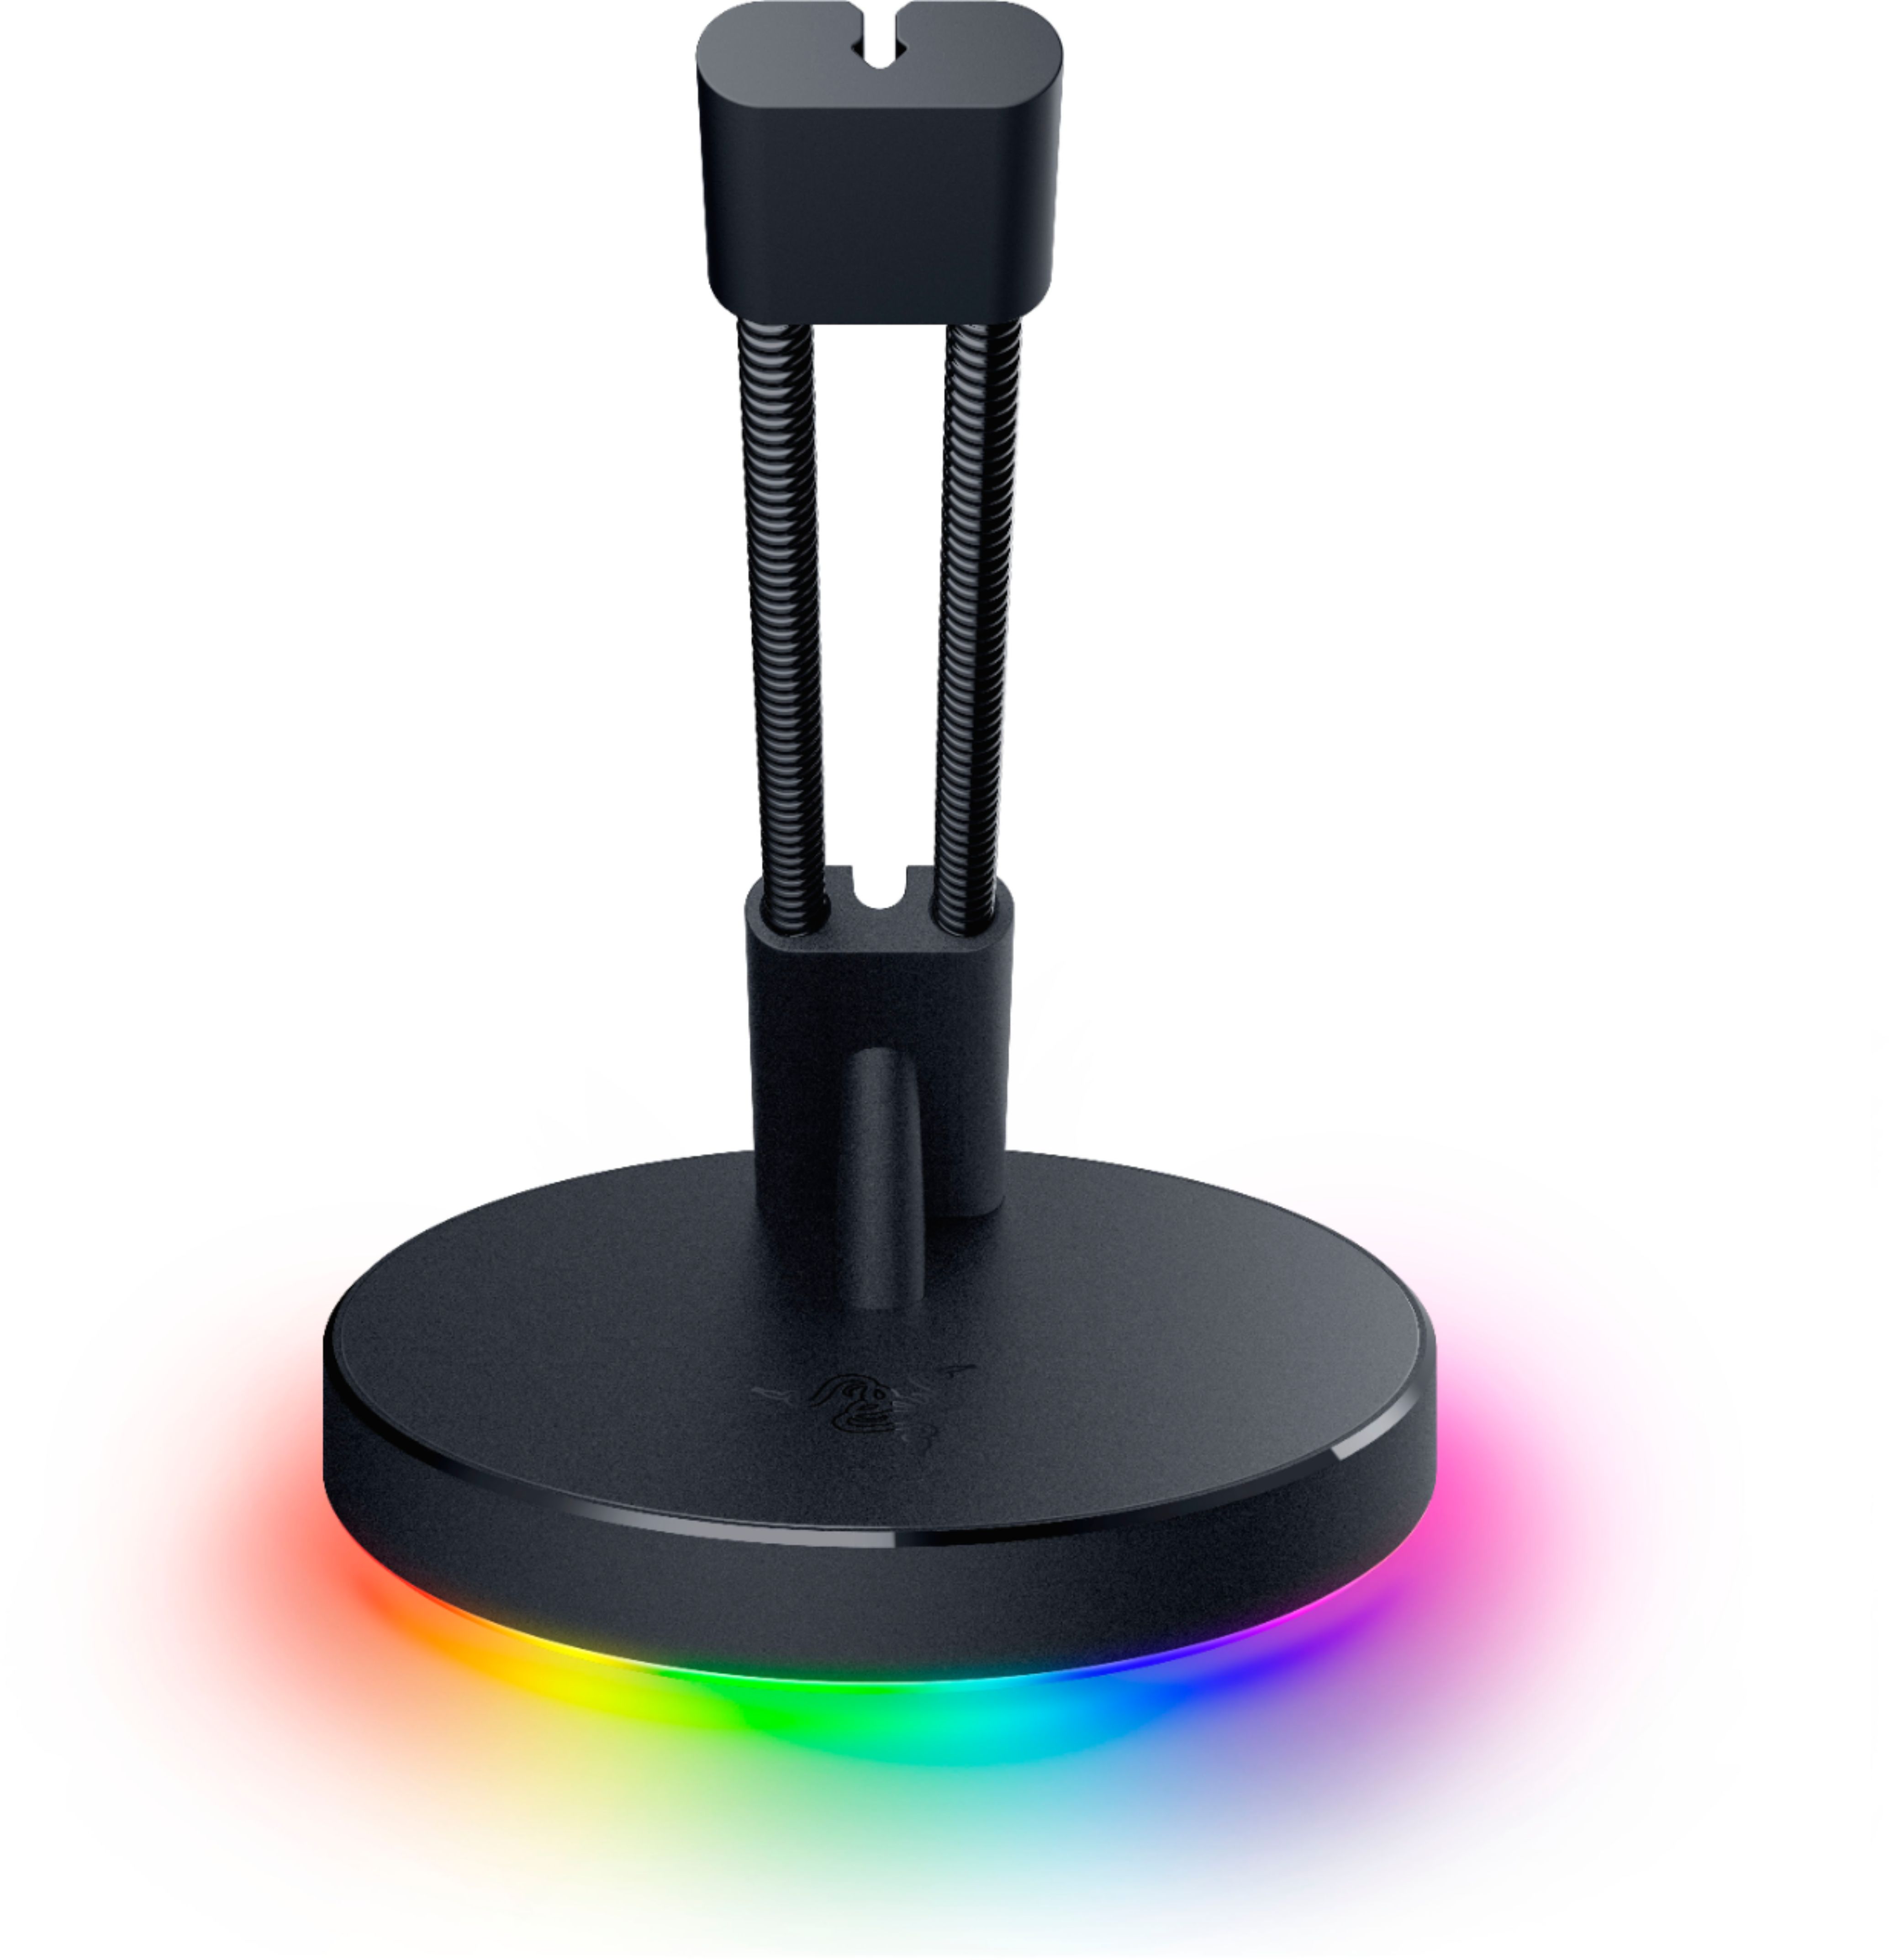 Razer - Bungee V3 Chroma: Mouse Cord Management System with Chroma™ RGB - Black